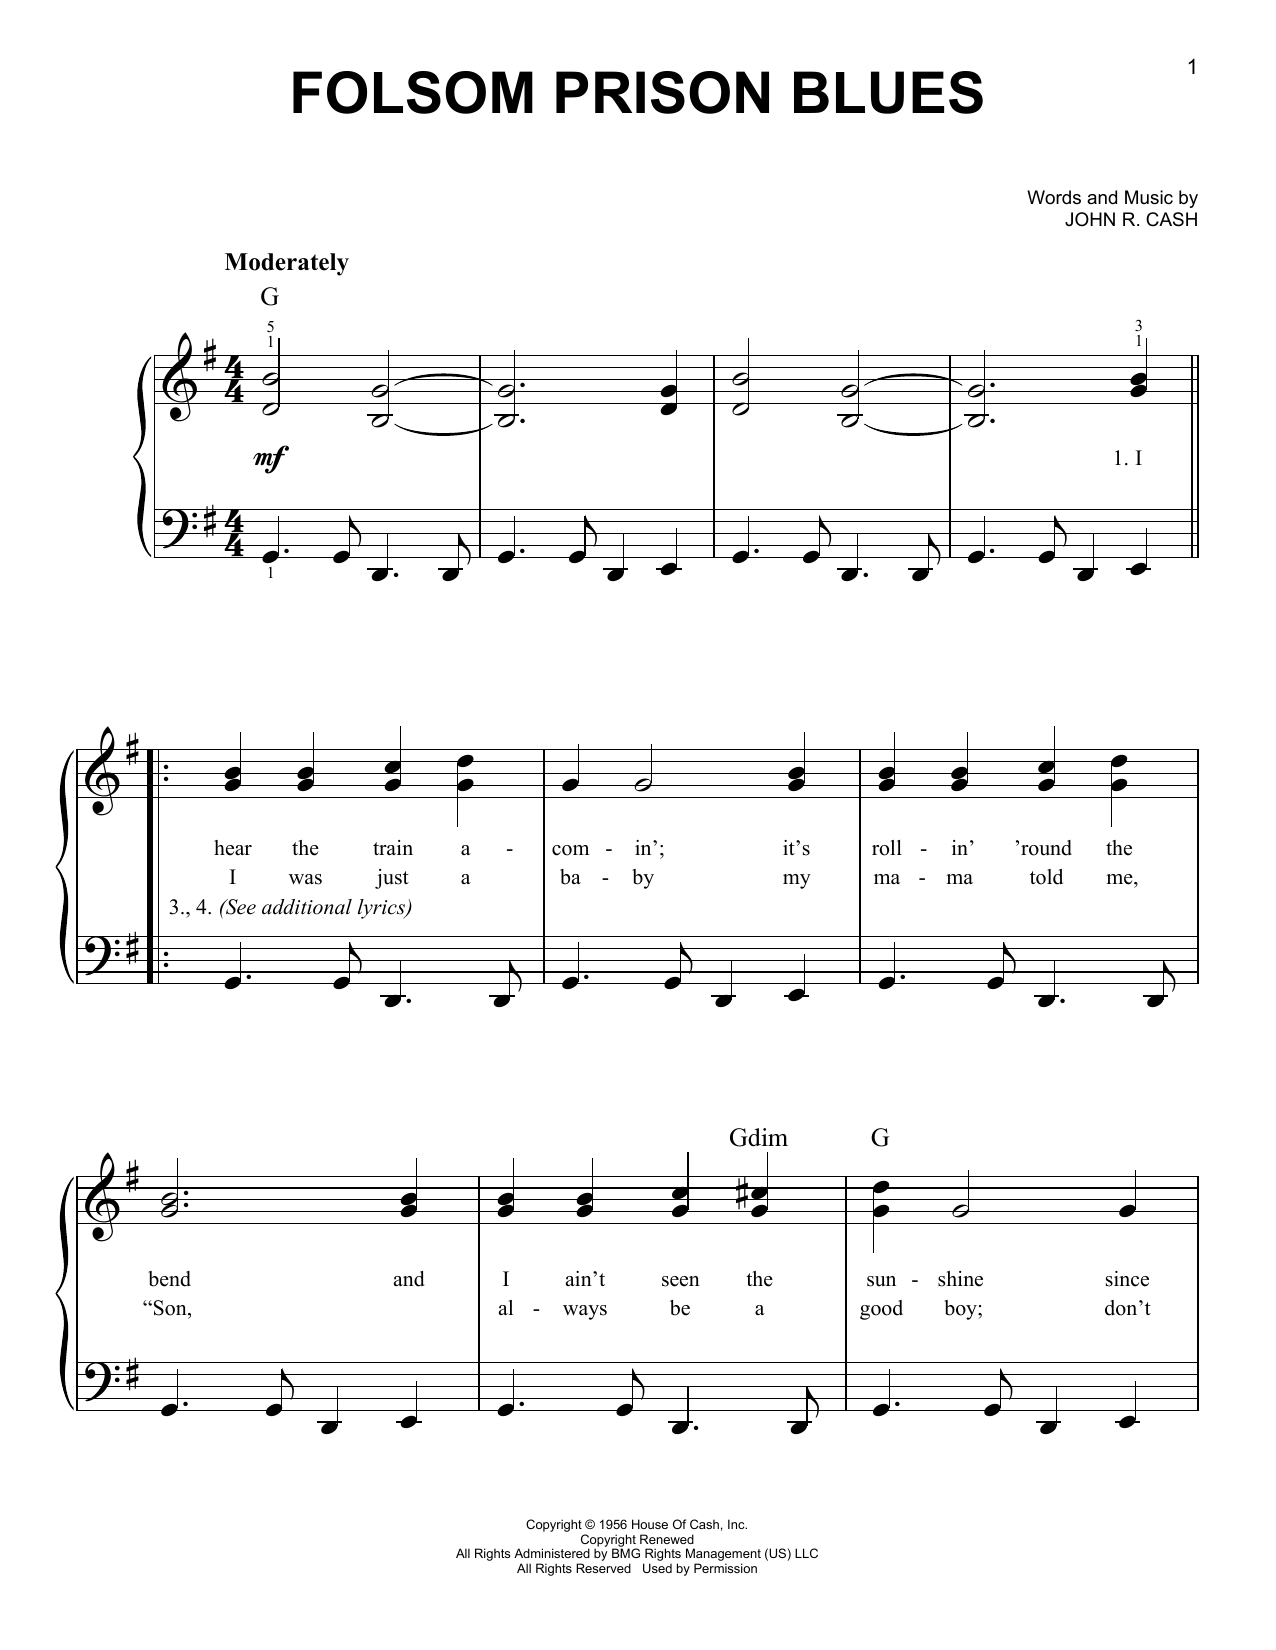 Johnny Cash Folsom Prison Blues Sheet Music Notes & Chords for Guitar Tab - Download or Print PDF